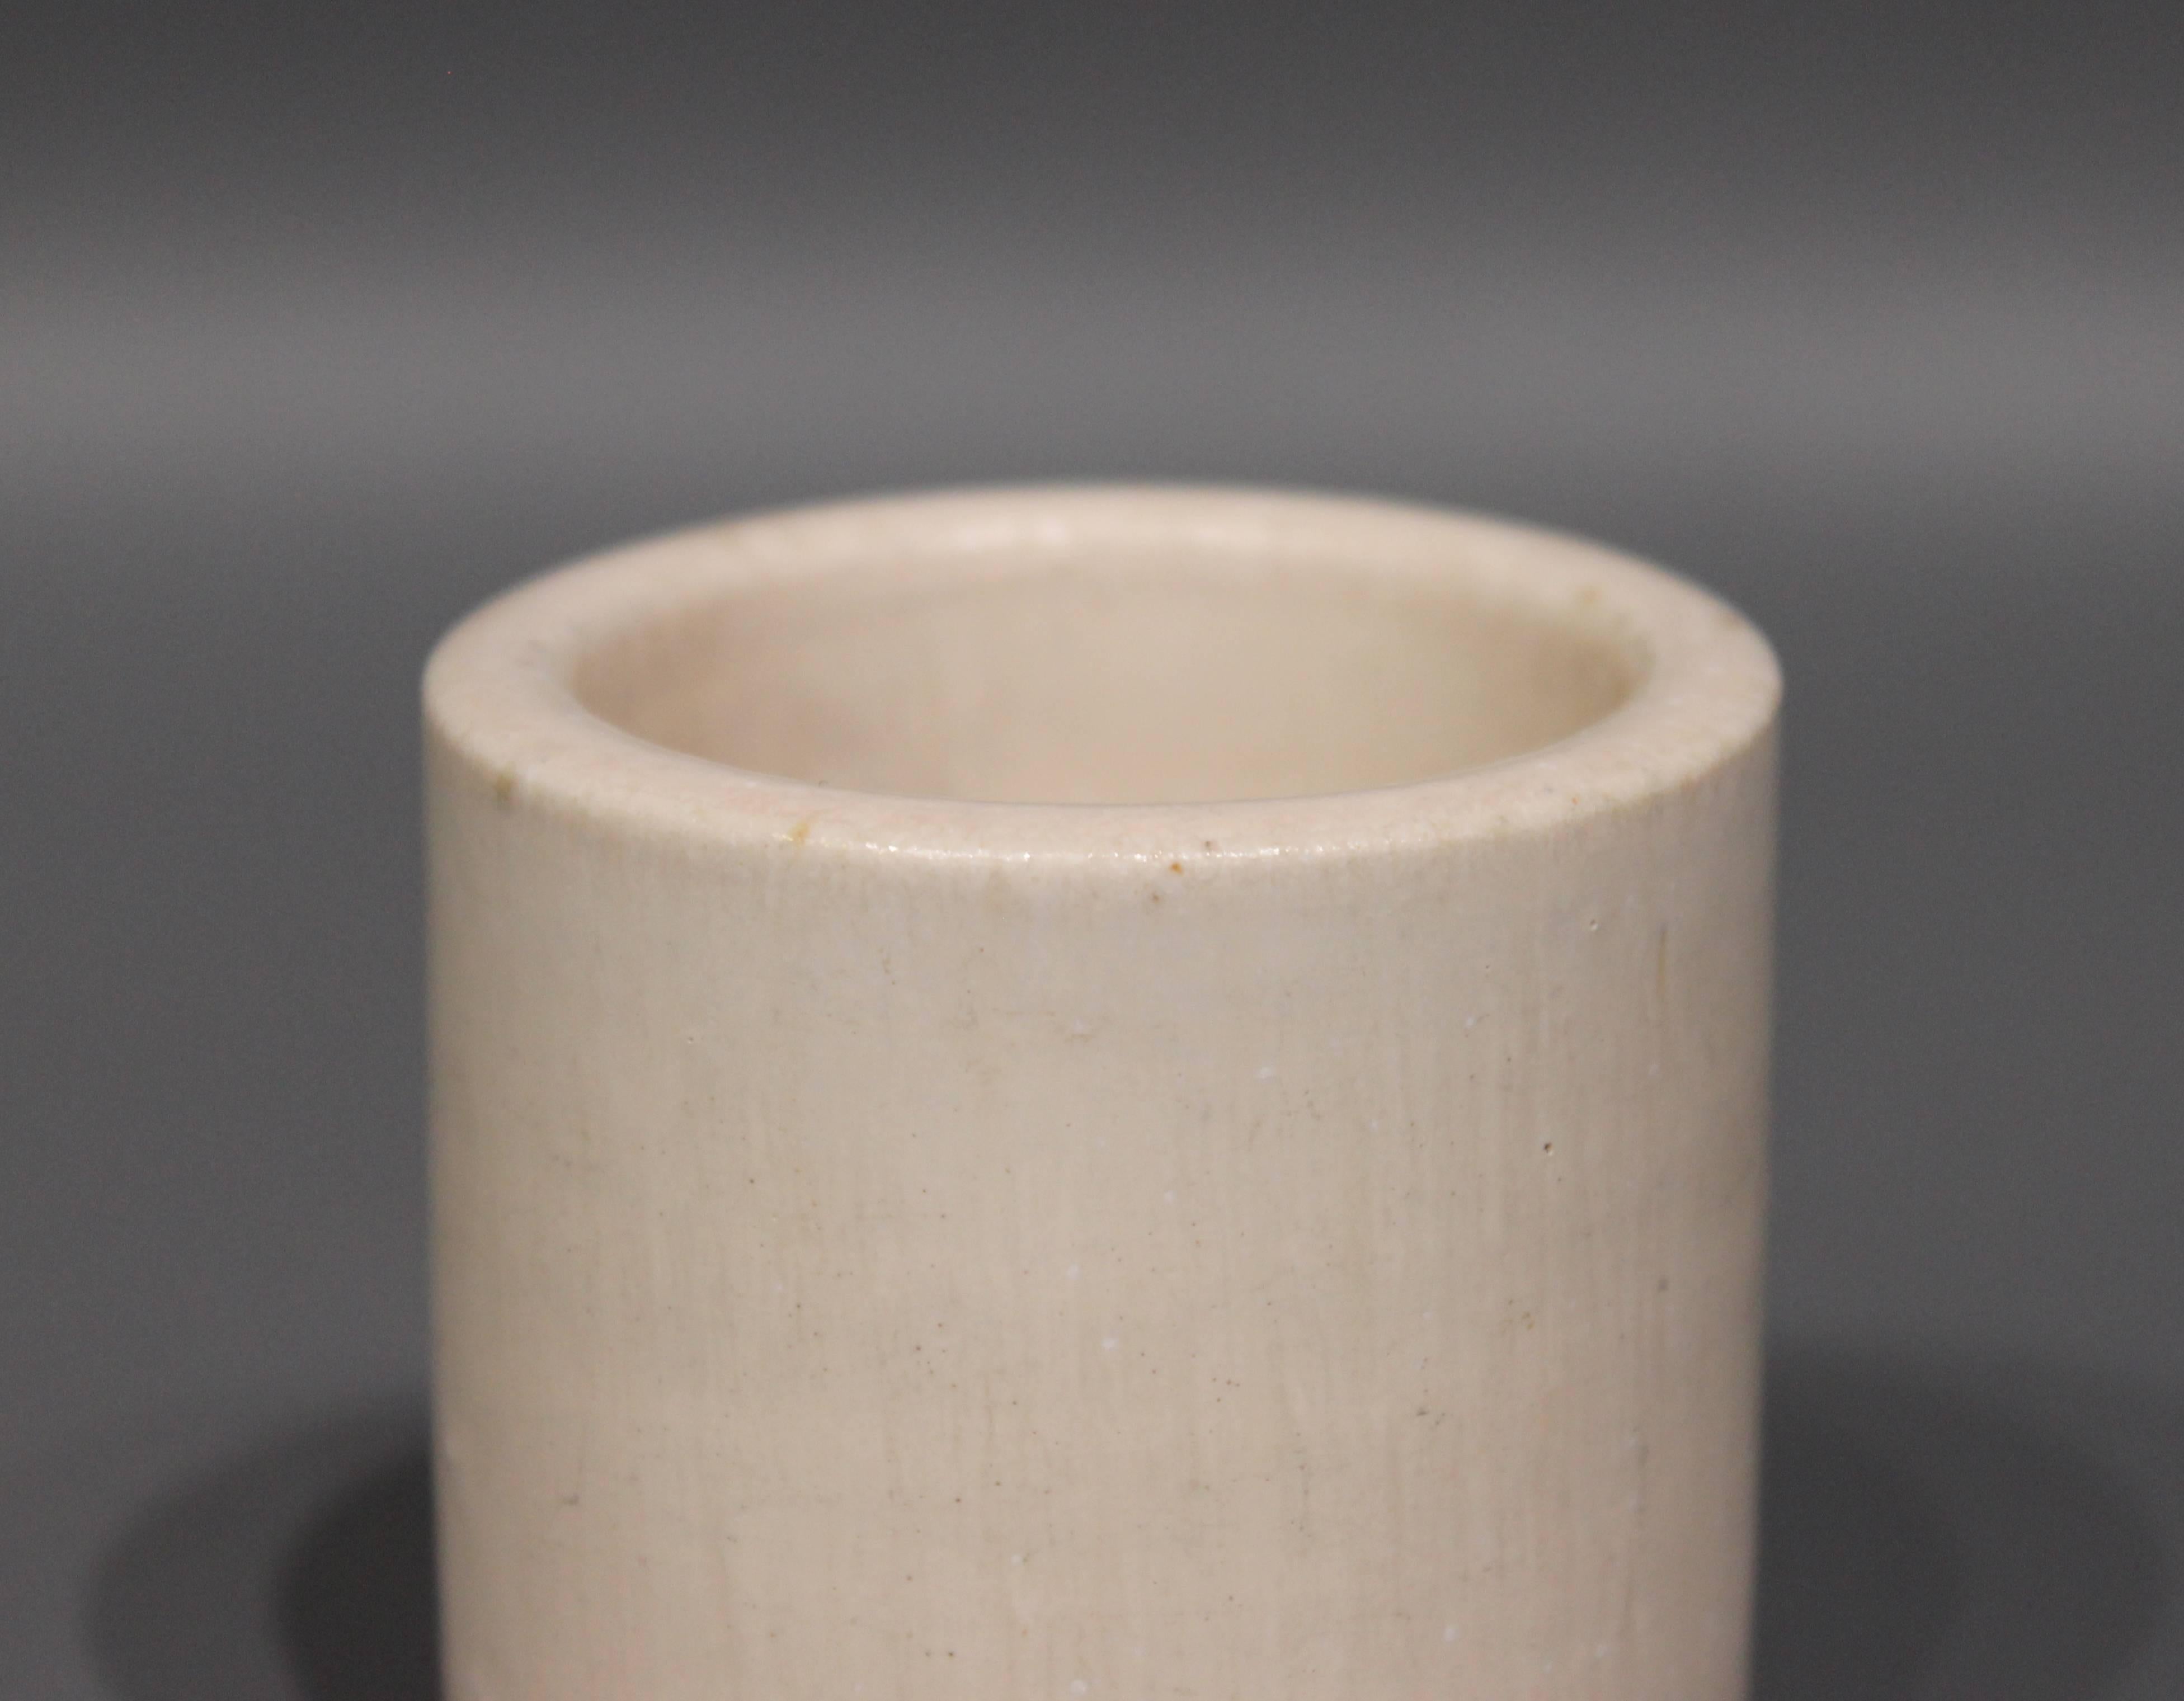 Scandinavian Modern Small Ceramic Jar/Vase with a White Glaze, No.: 78 by Saxbo